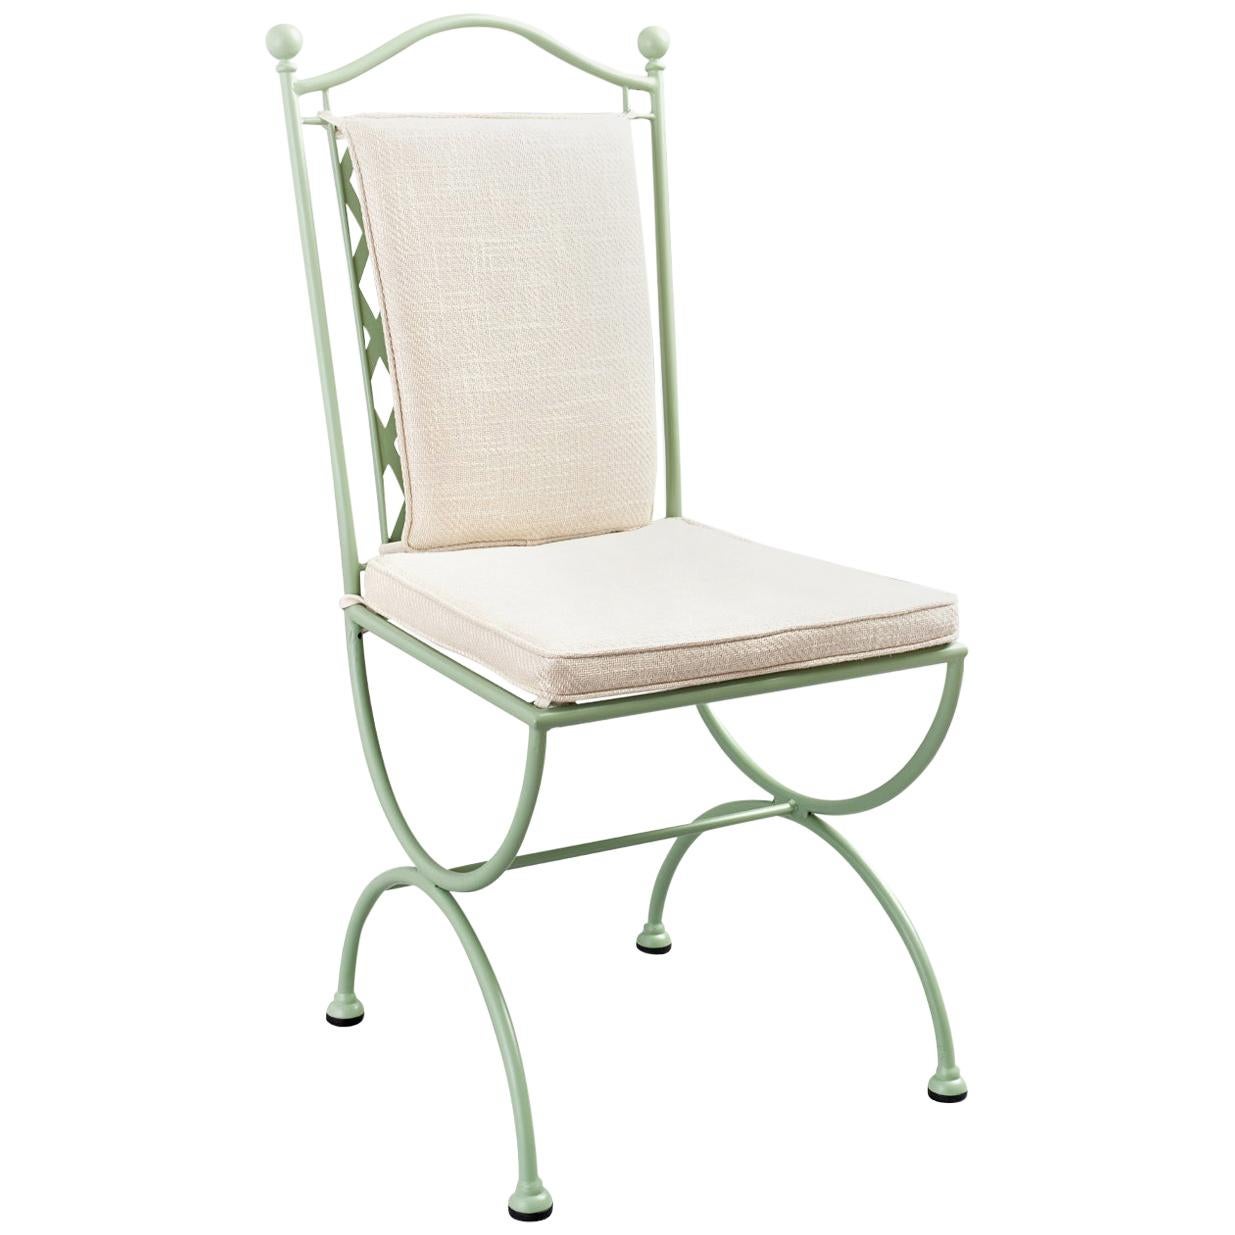 Rombo Outdoor Green Wrought Iron Chair